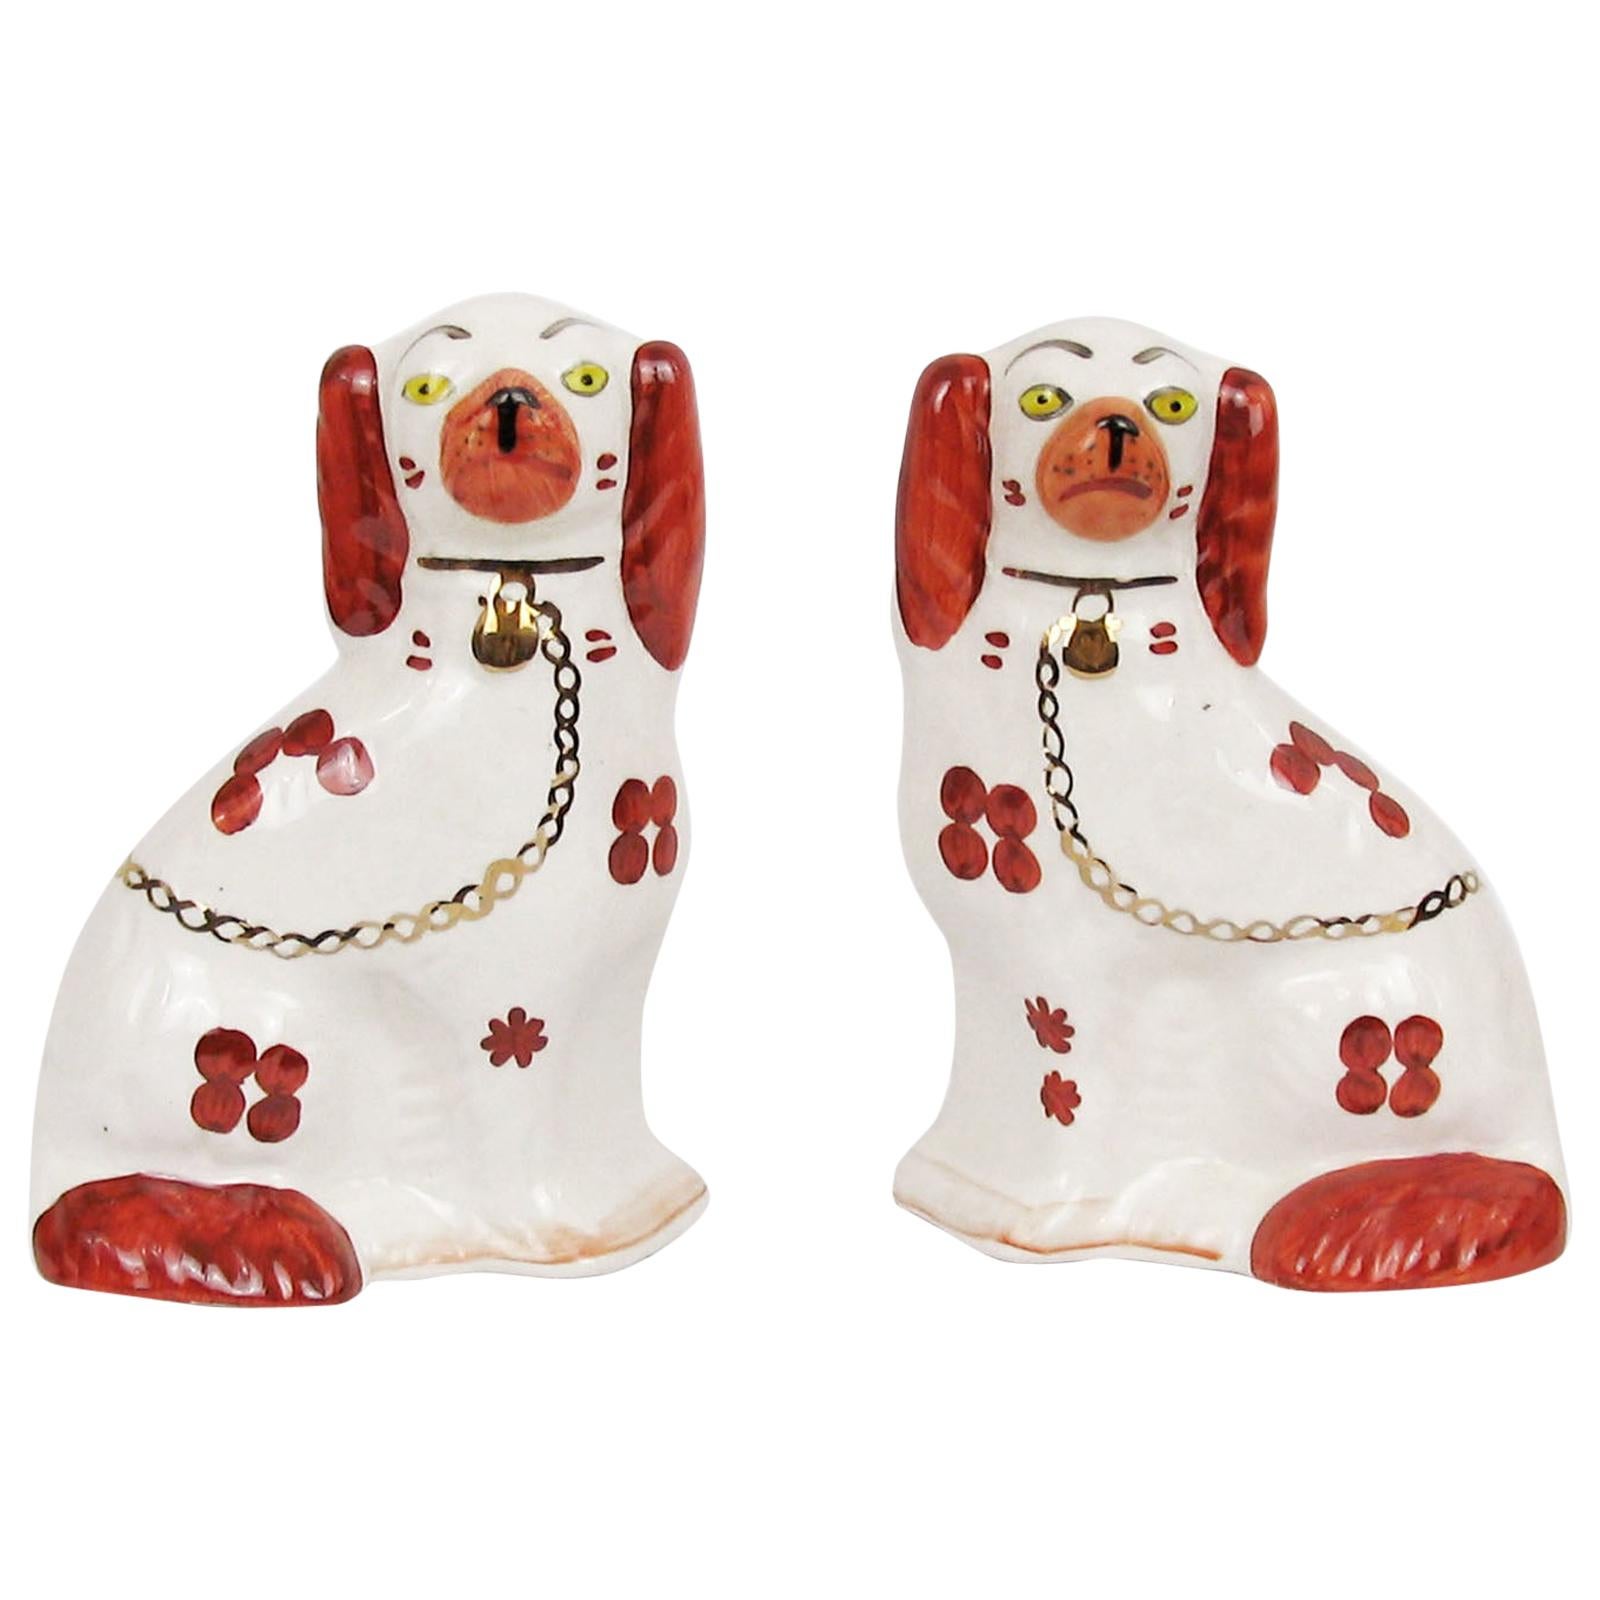 Midcentury Staffordshire Ceramic Dogs